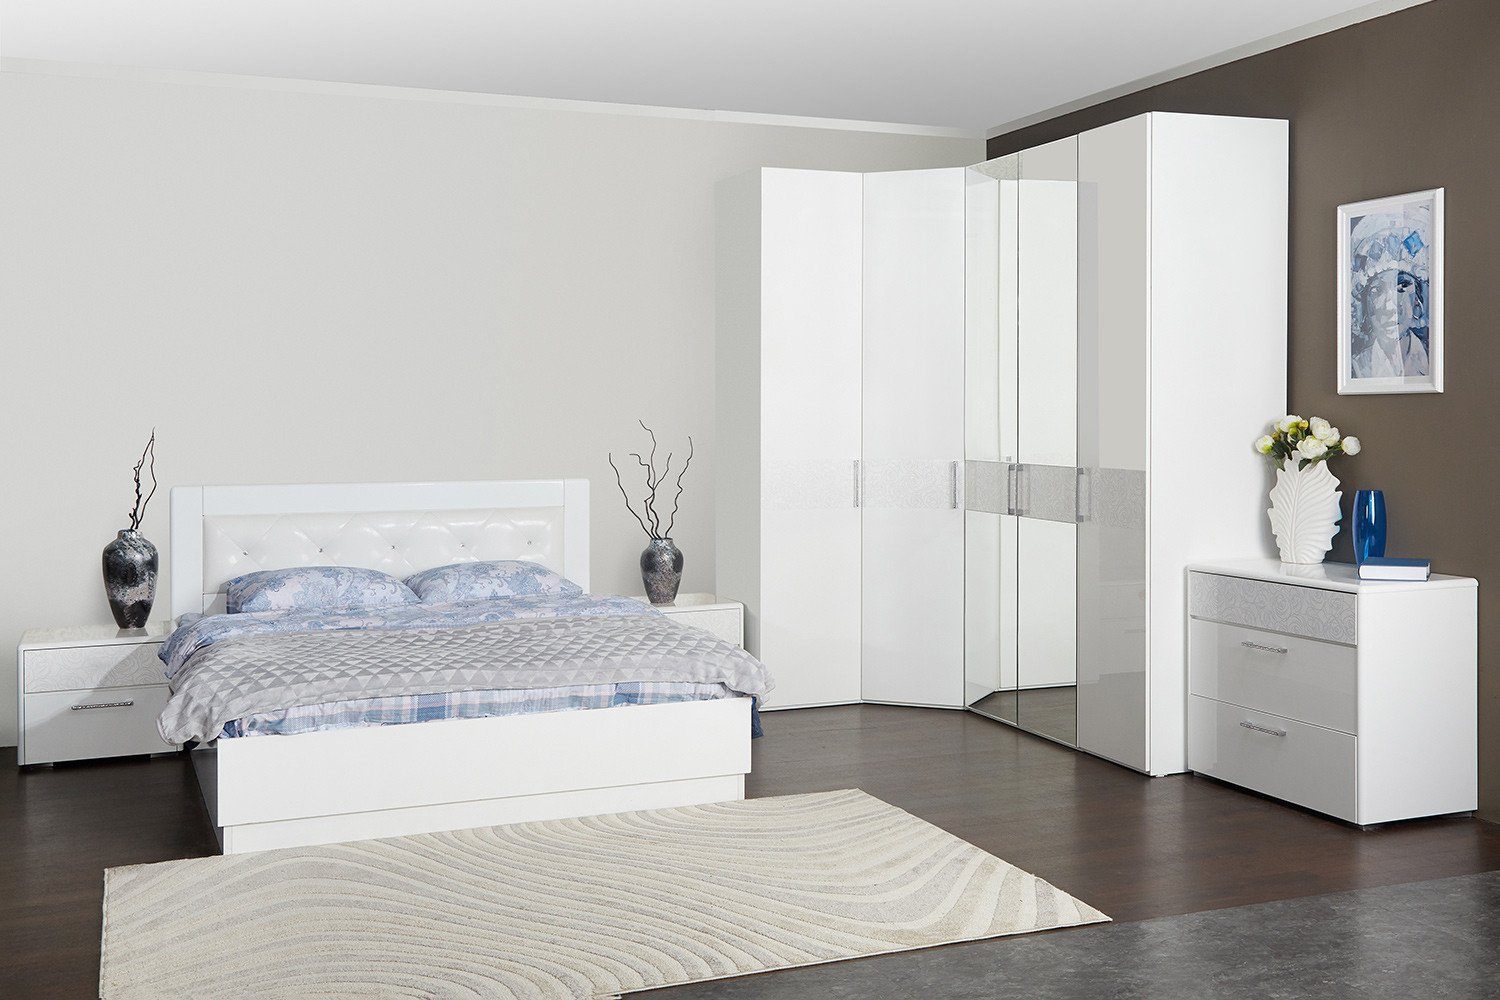 corner bedroom furniture ideas